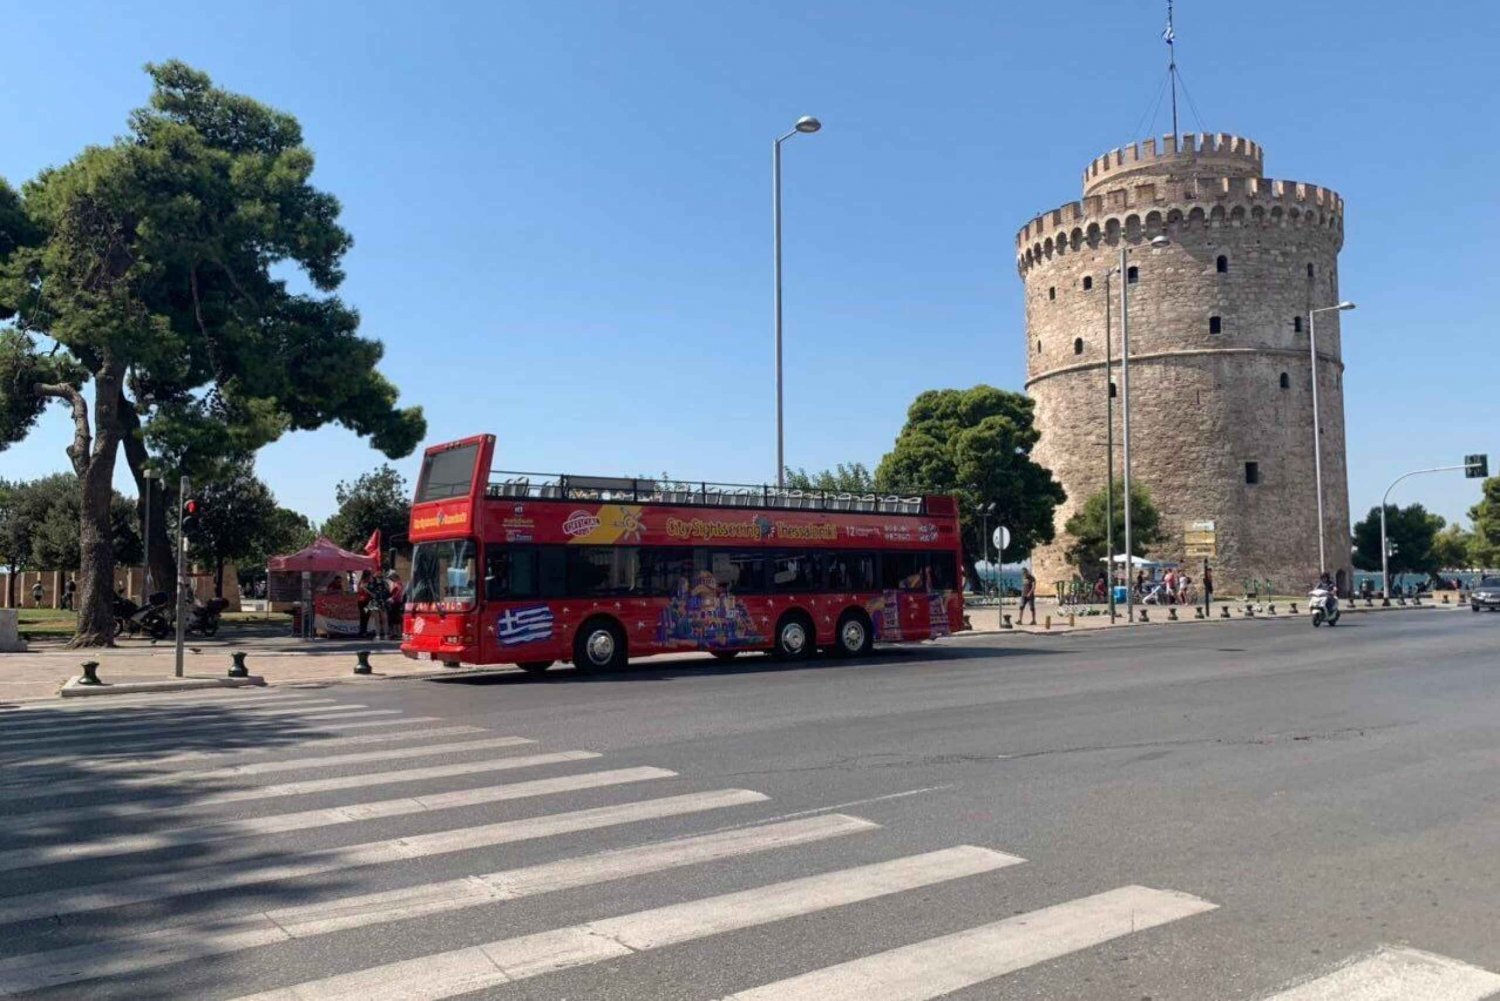 Tessalônica: City Sightseeing Hop-On Hop-Off Bus Tour